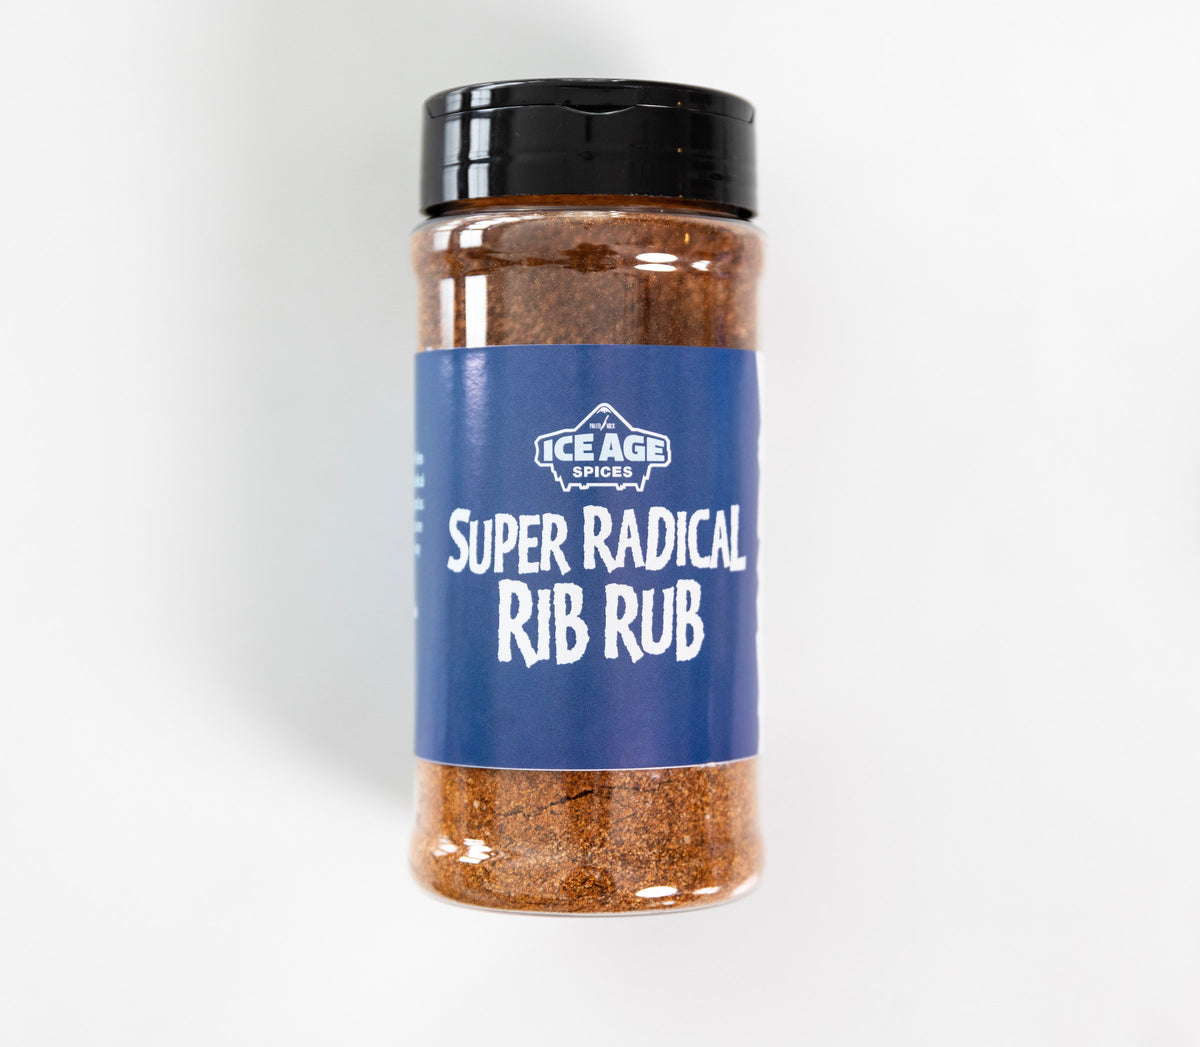 Super Radical Rib Rub Spice Blend